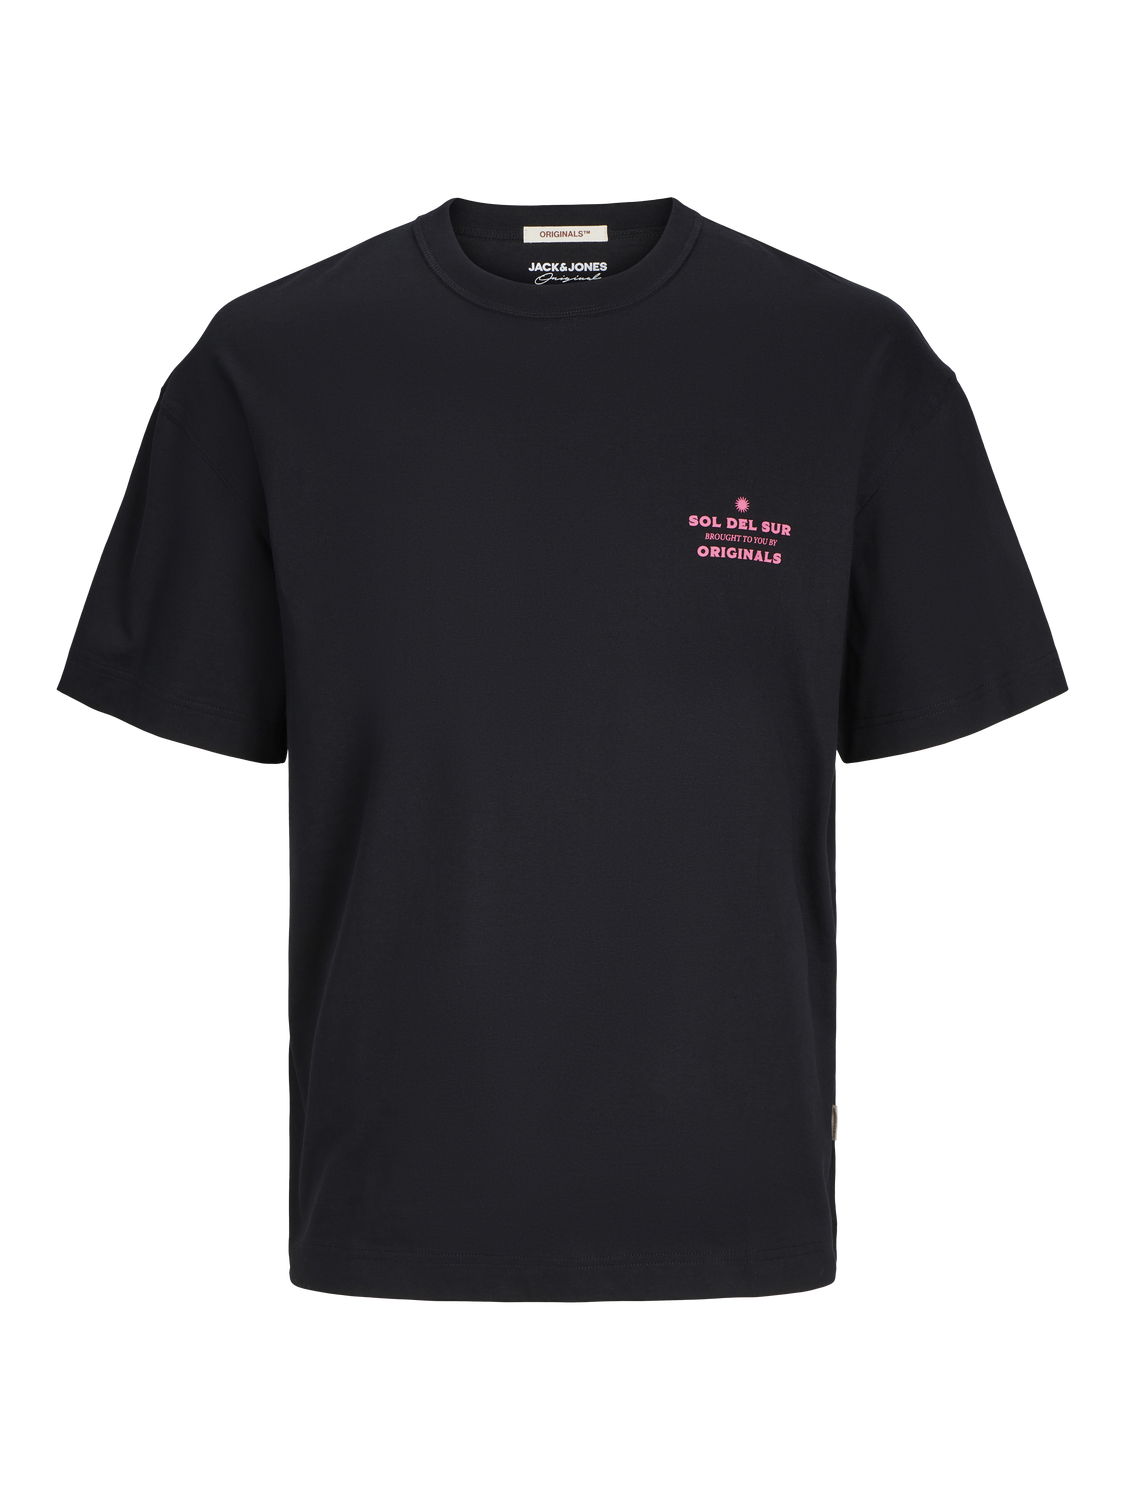 Jack & Jones Printed T-shirt For boys -Black - 12264219